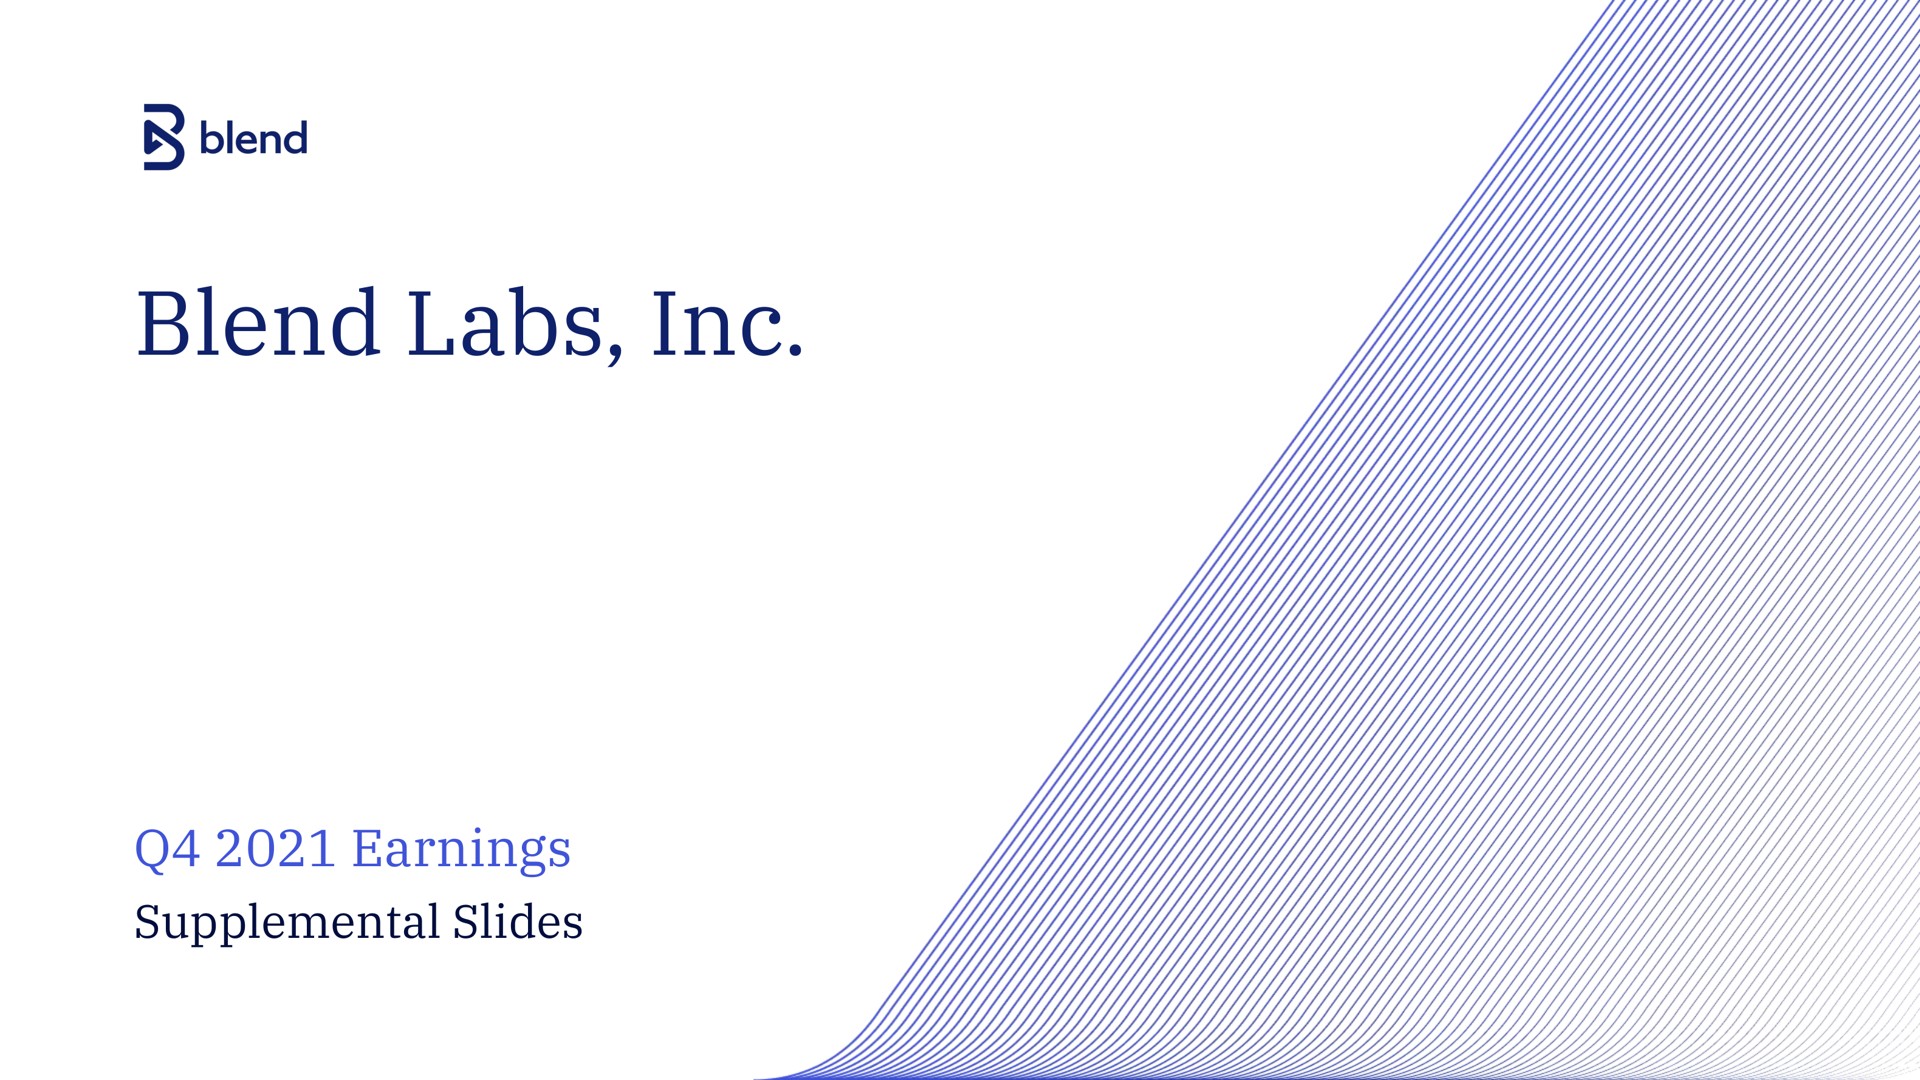 blend labs earnings supplemental slides | Blend